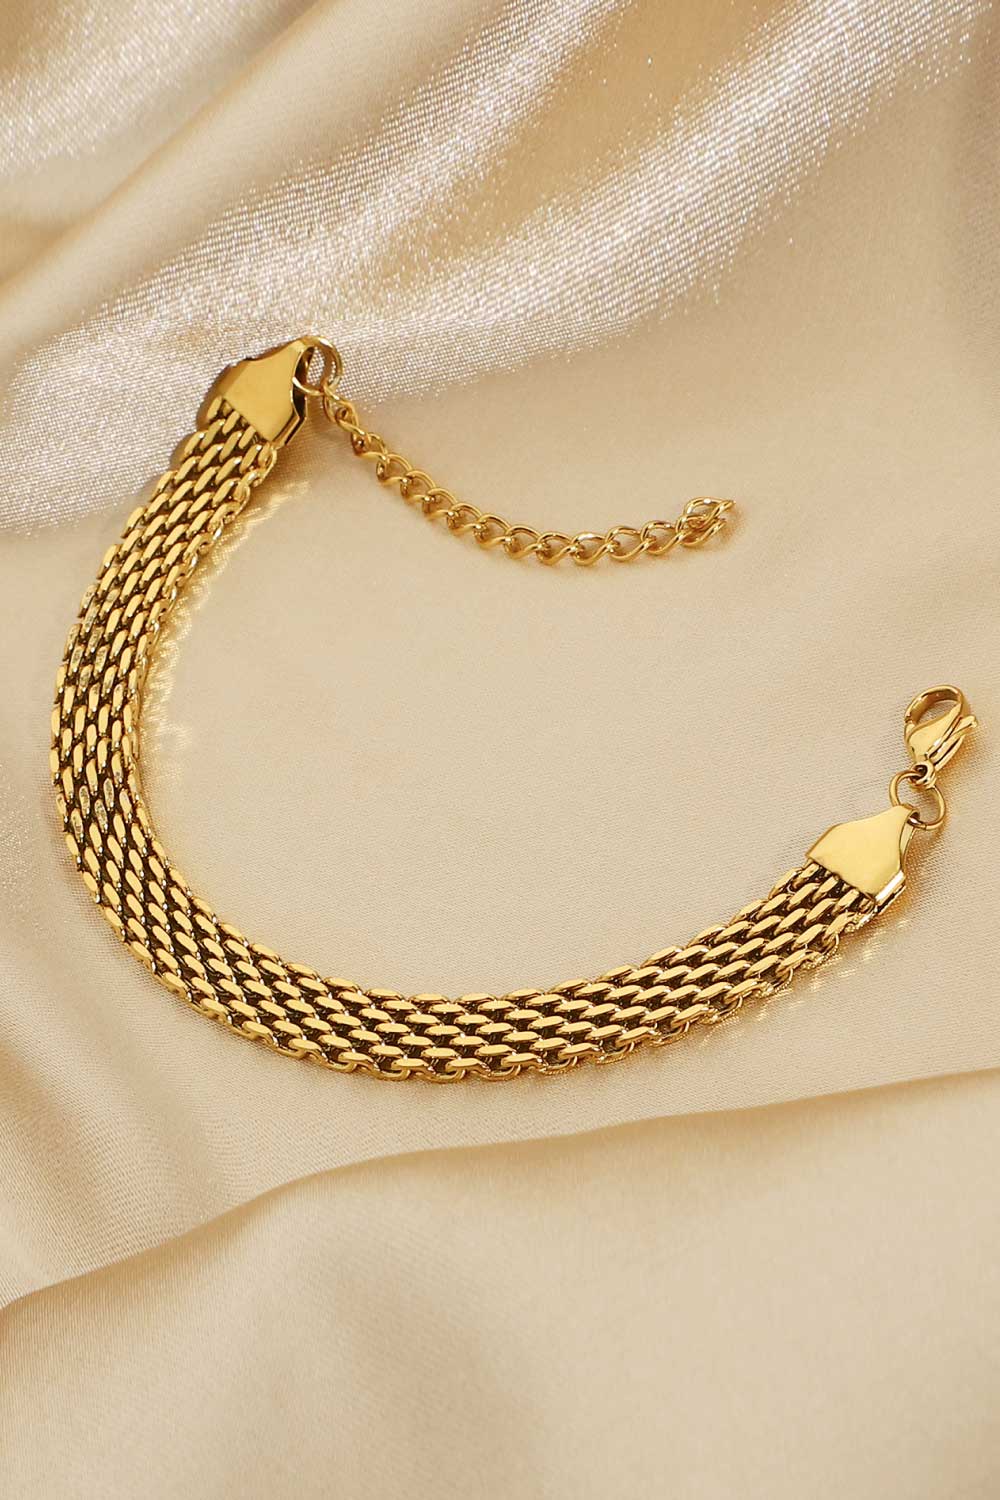 18K Gold-Plated Wide Chain Bracelet - Gold / One Size - Women’s Jewelry - Bracelets - 7 - 2024